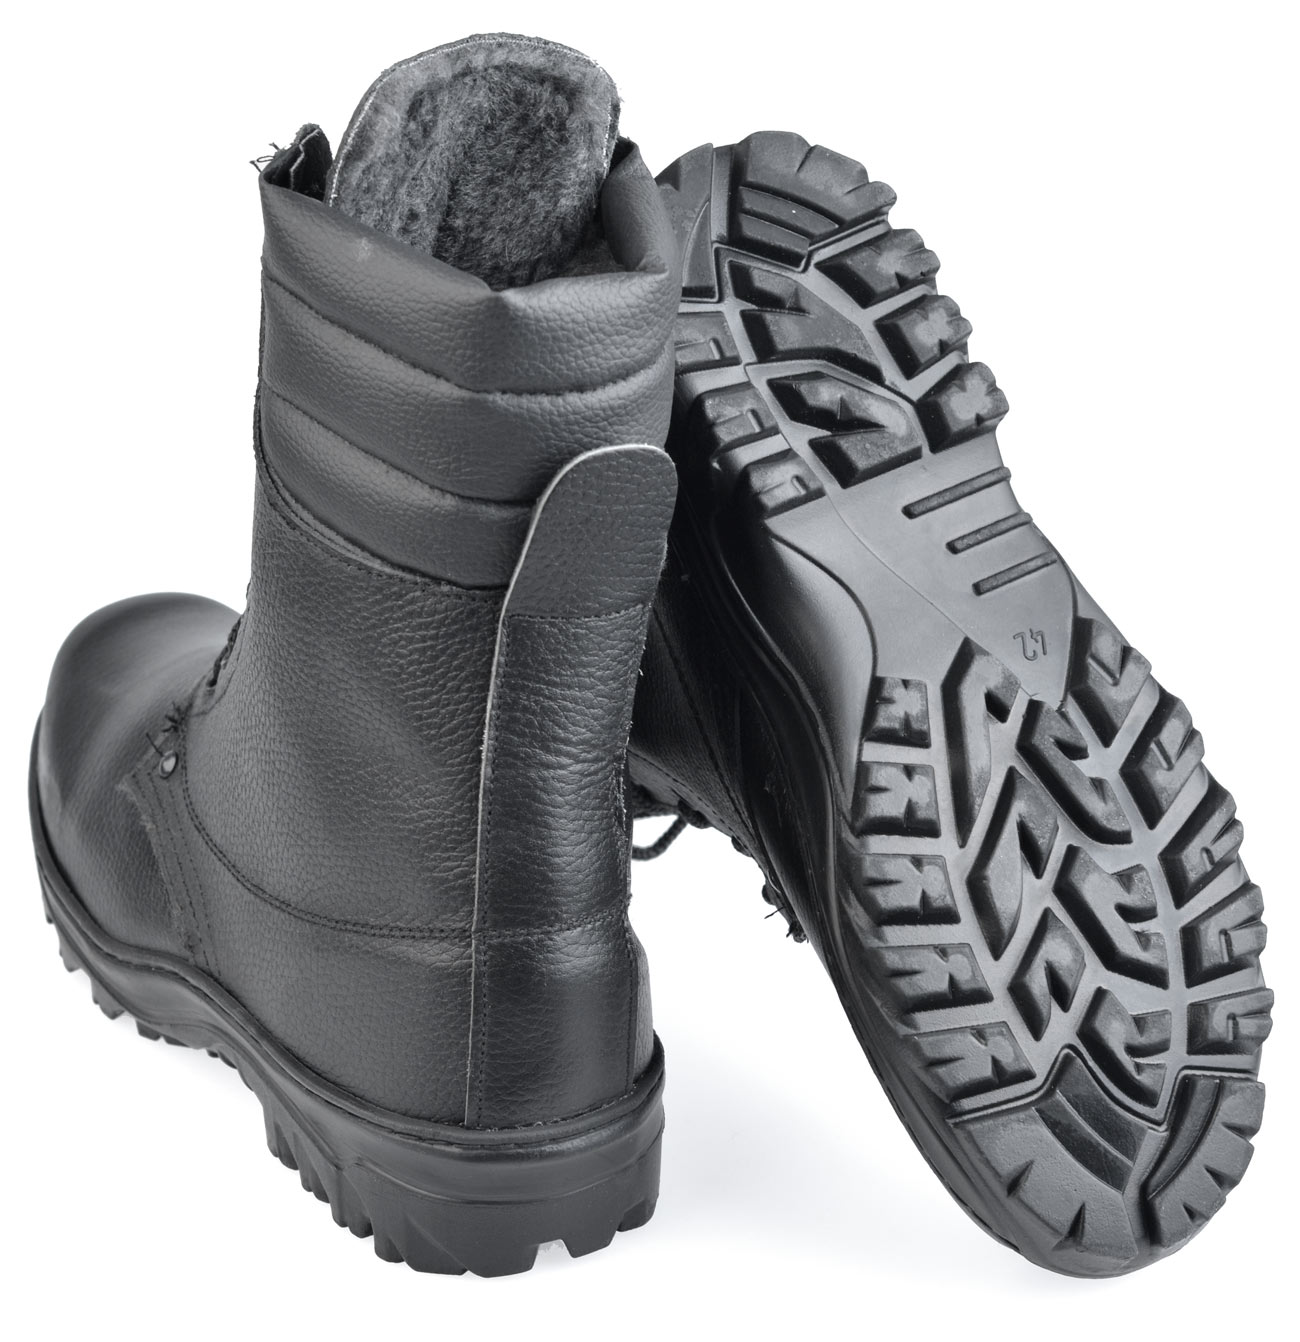 Ботинки с высоким берцем  "Ратник-Зима" на шерстяном меху, подошва резина (в уп. 8 пар). Фото N2